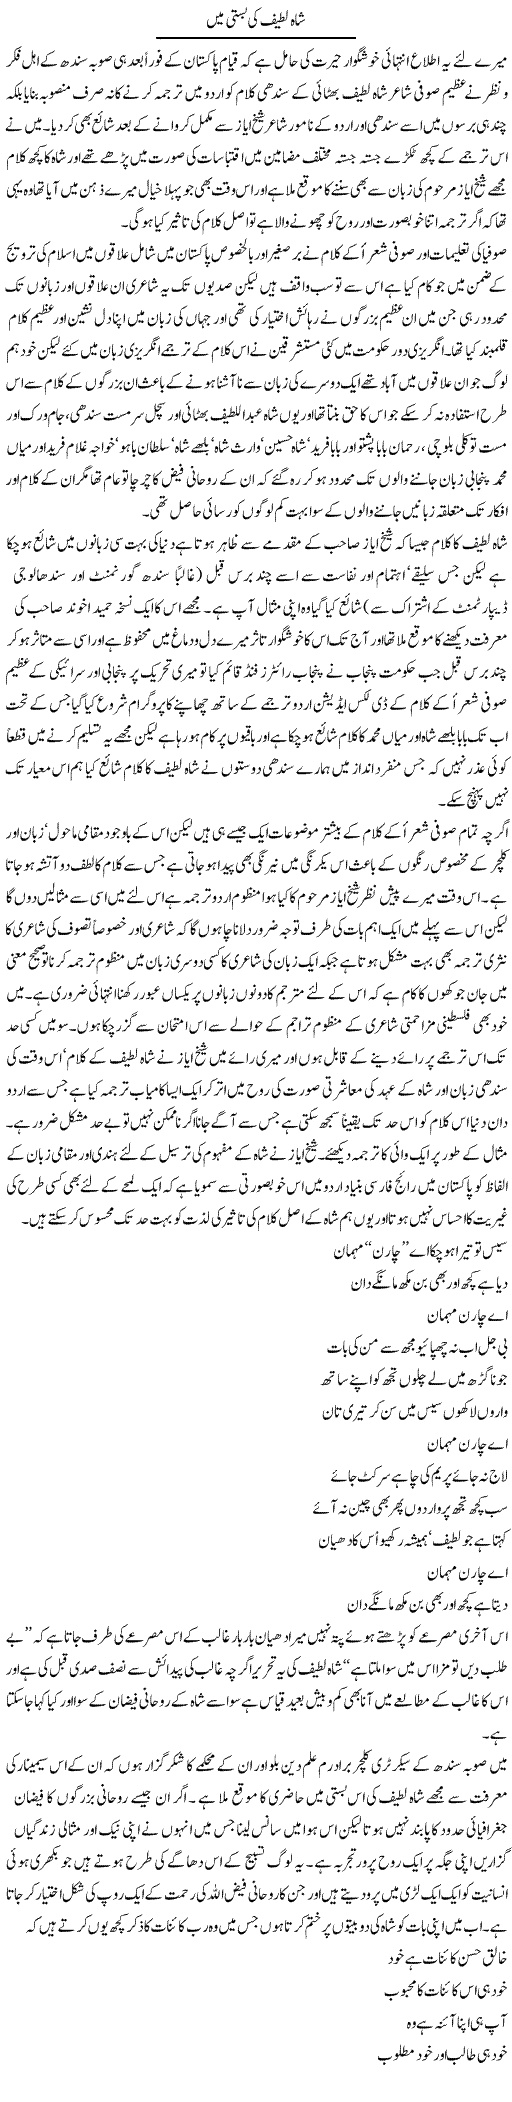 Shah Latif Express Column Amjad Islam 21 January 2011